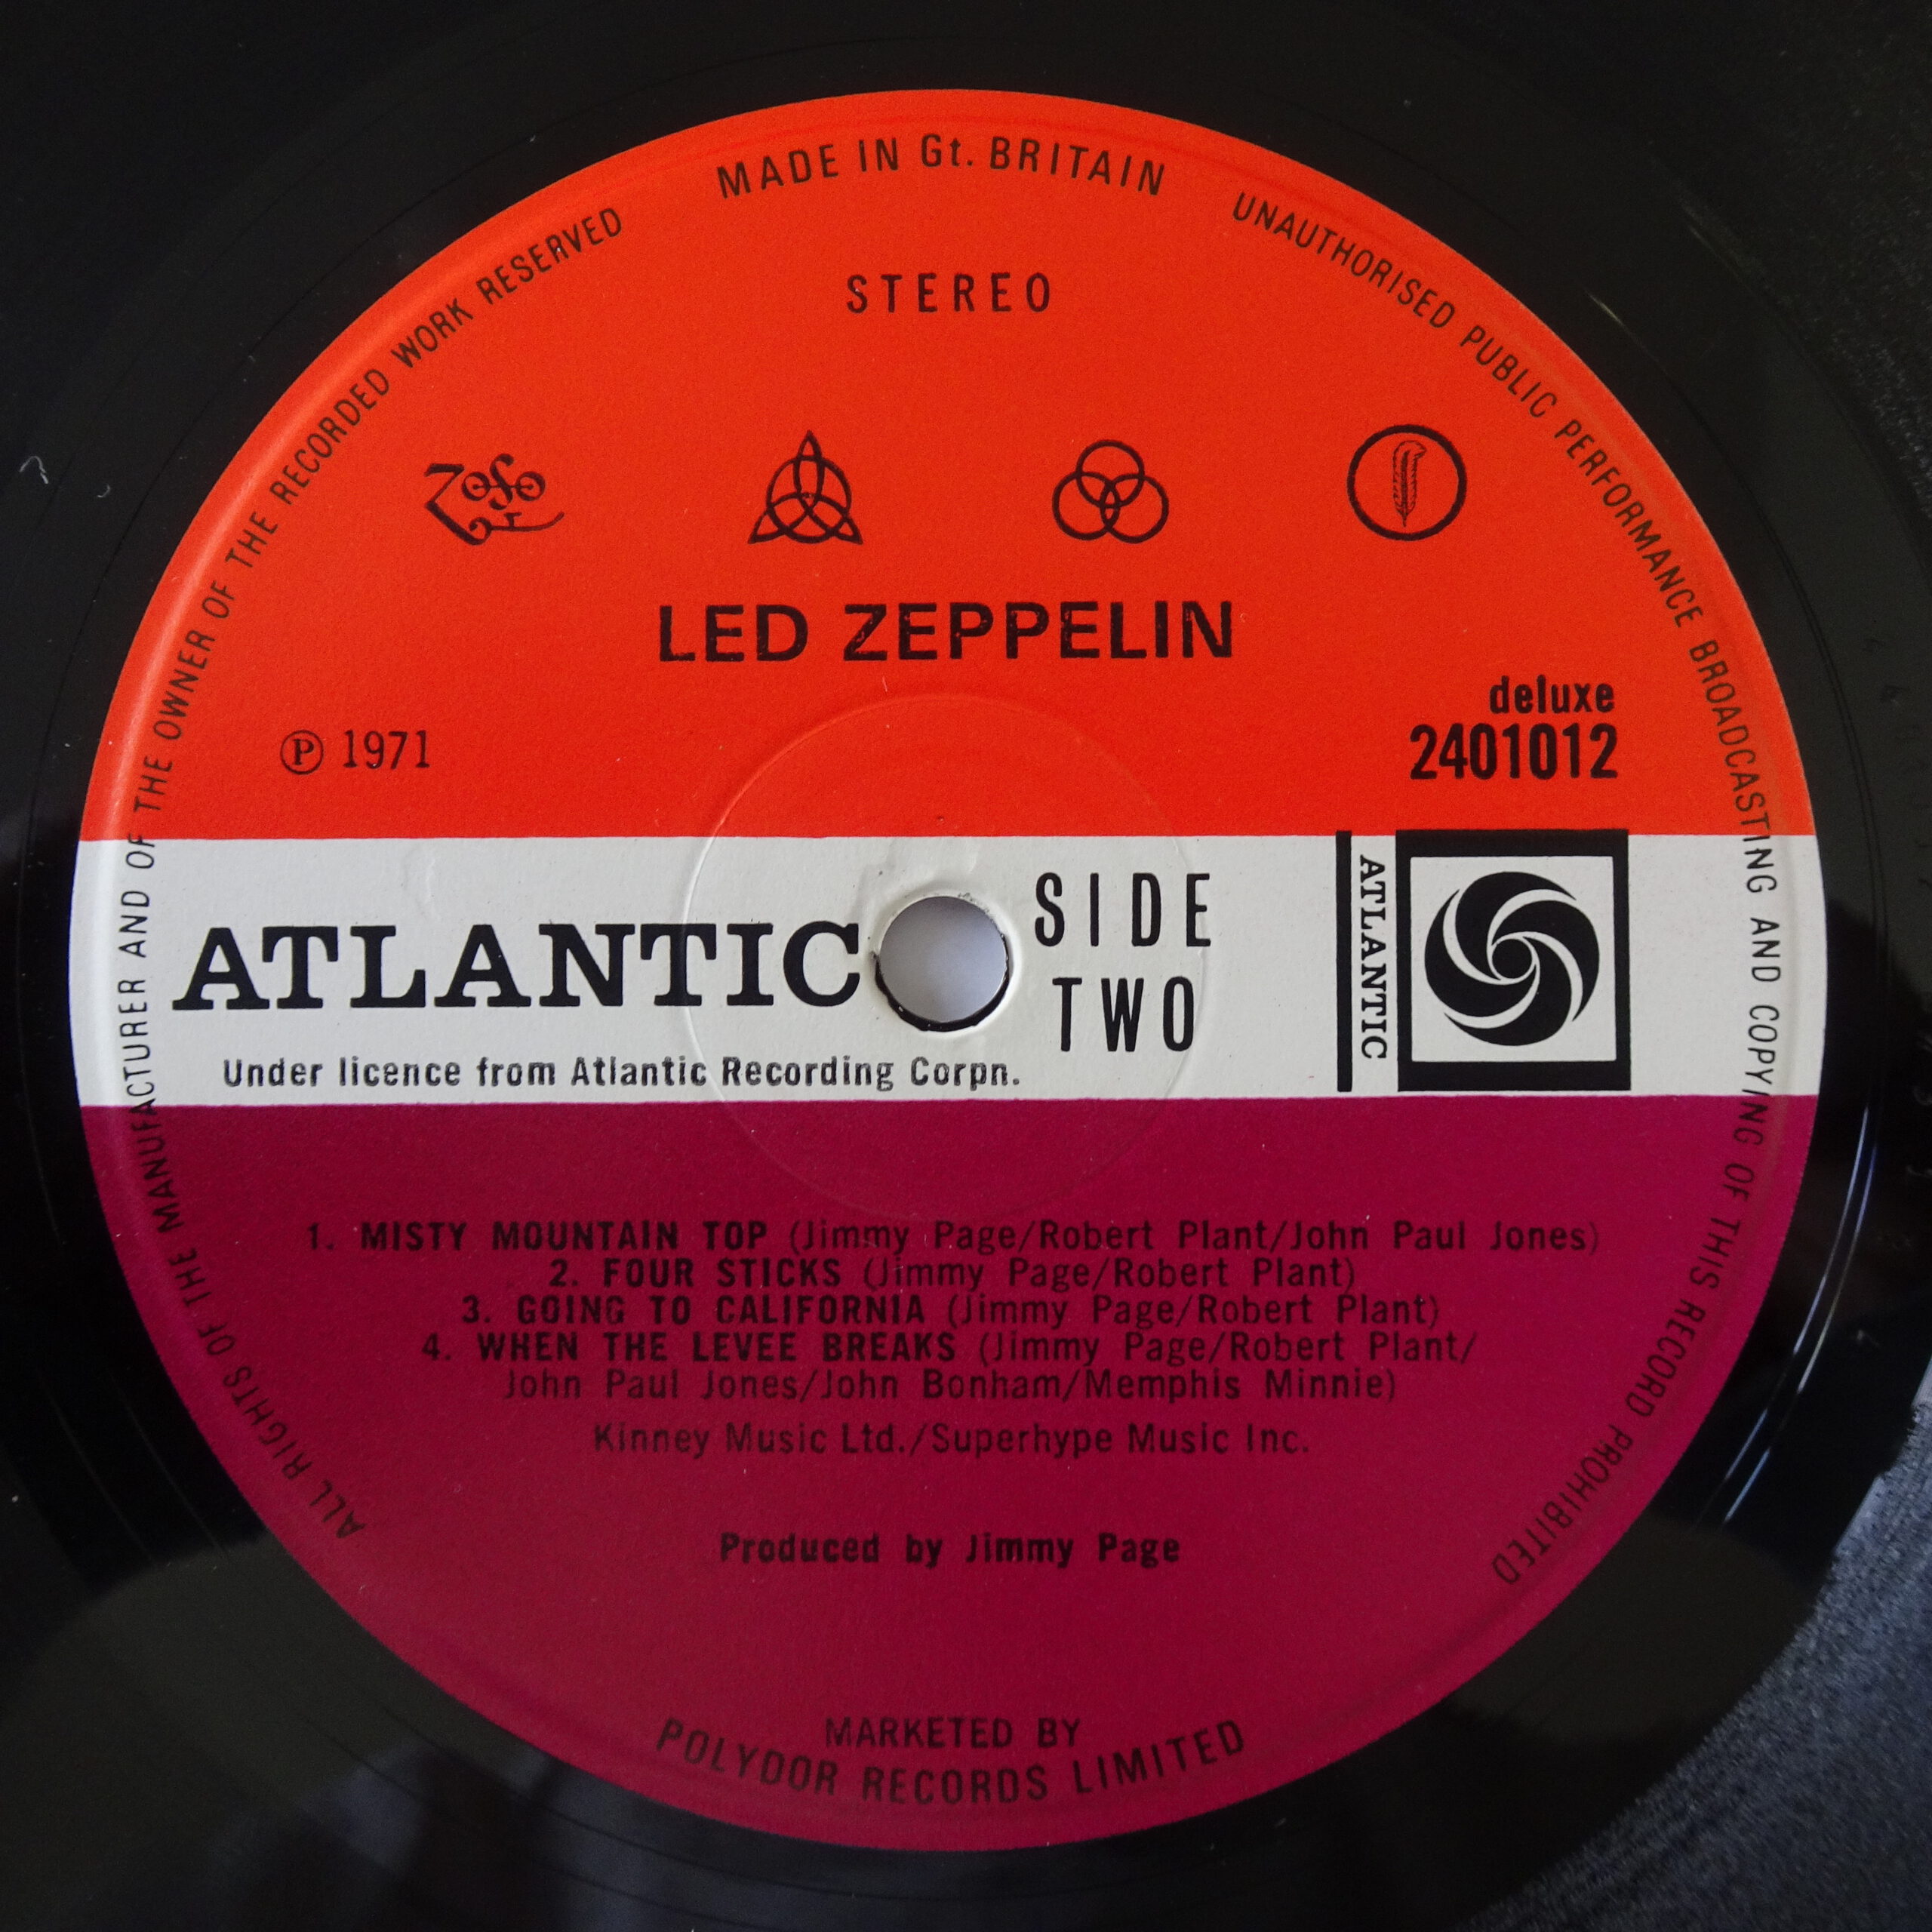 Check your Vinyl copy of Led Zeppelin II Original 1st pressings dis n